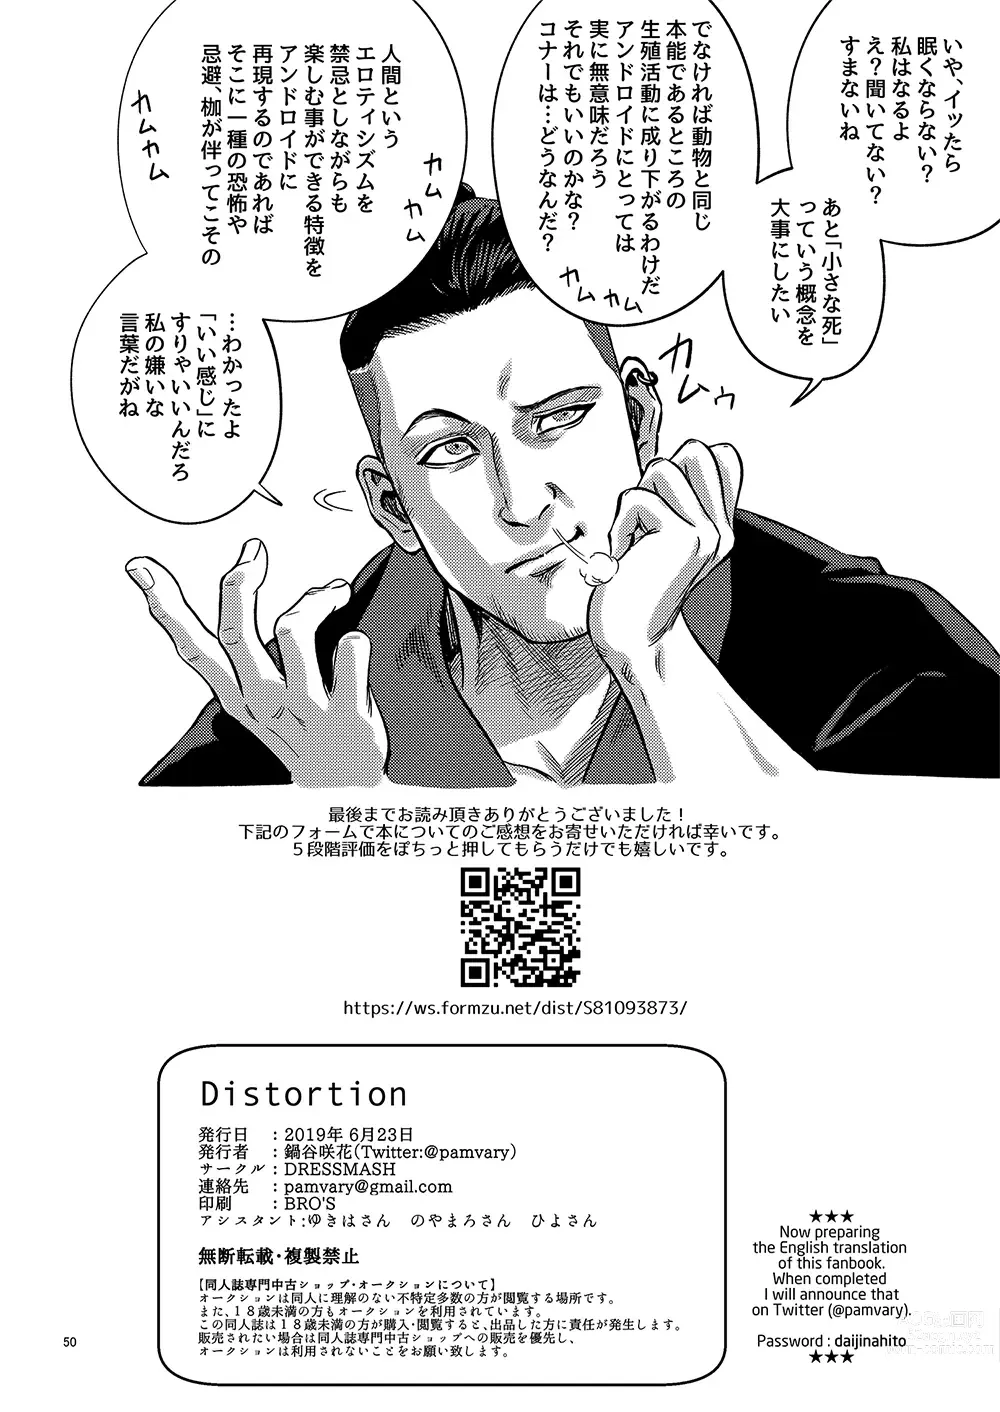 Page 49 of doujinshi Distortion